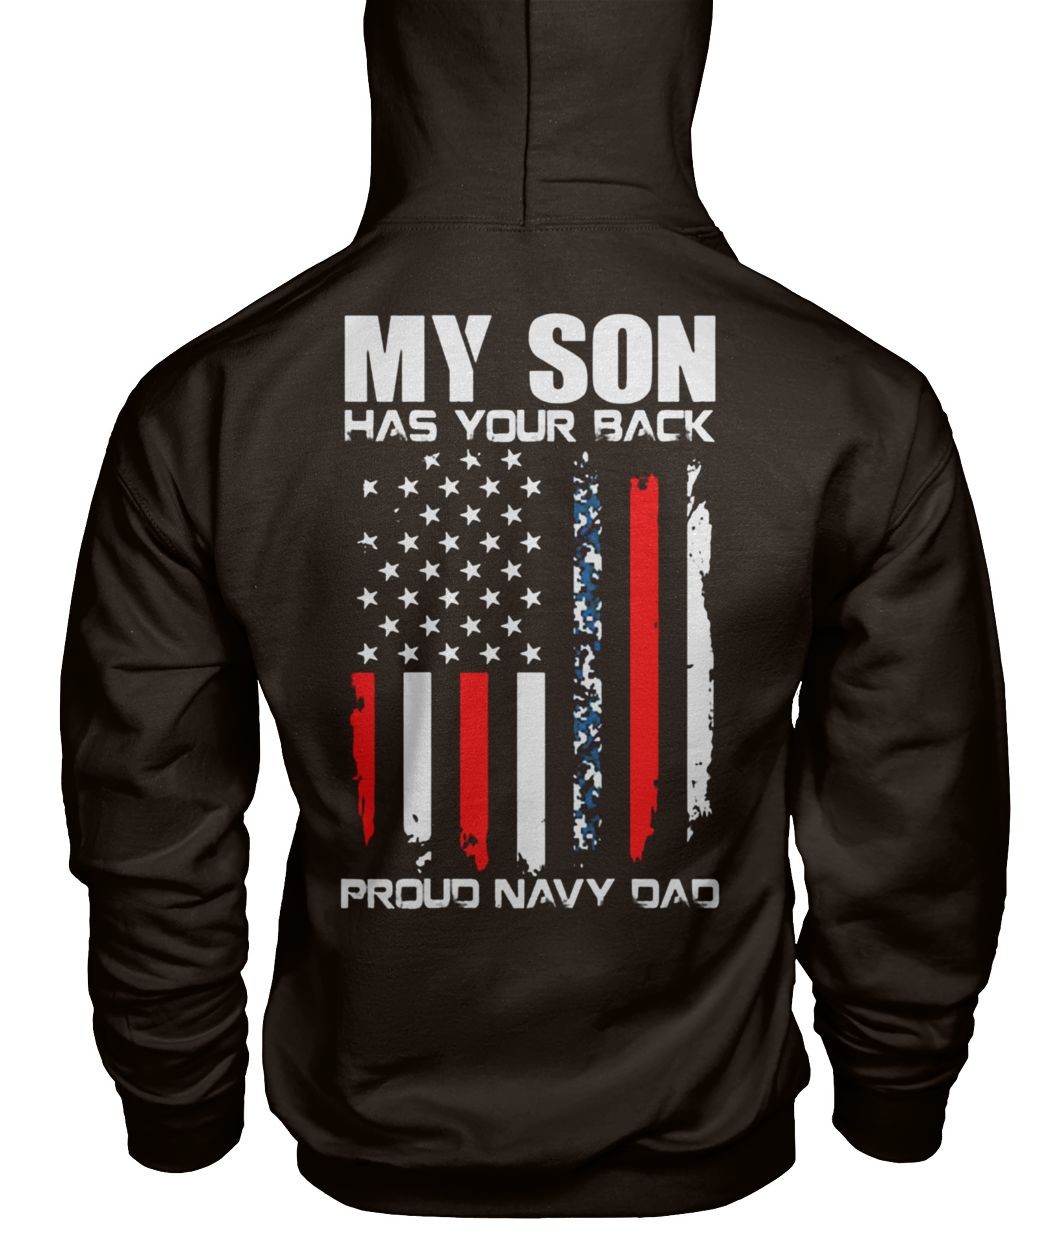 My son has your back proud navy dad gildan hoodie